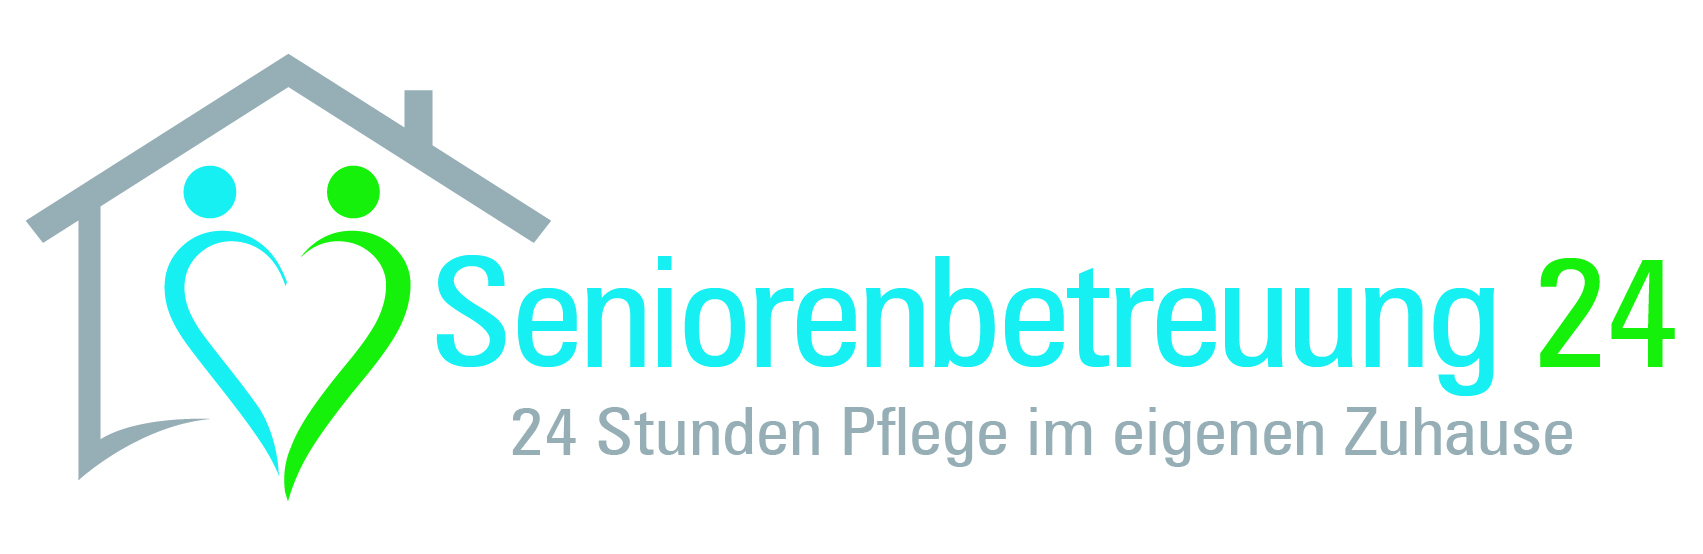 Logo von Seniorenbetreuung24 Weserbergland